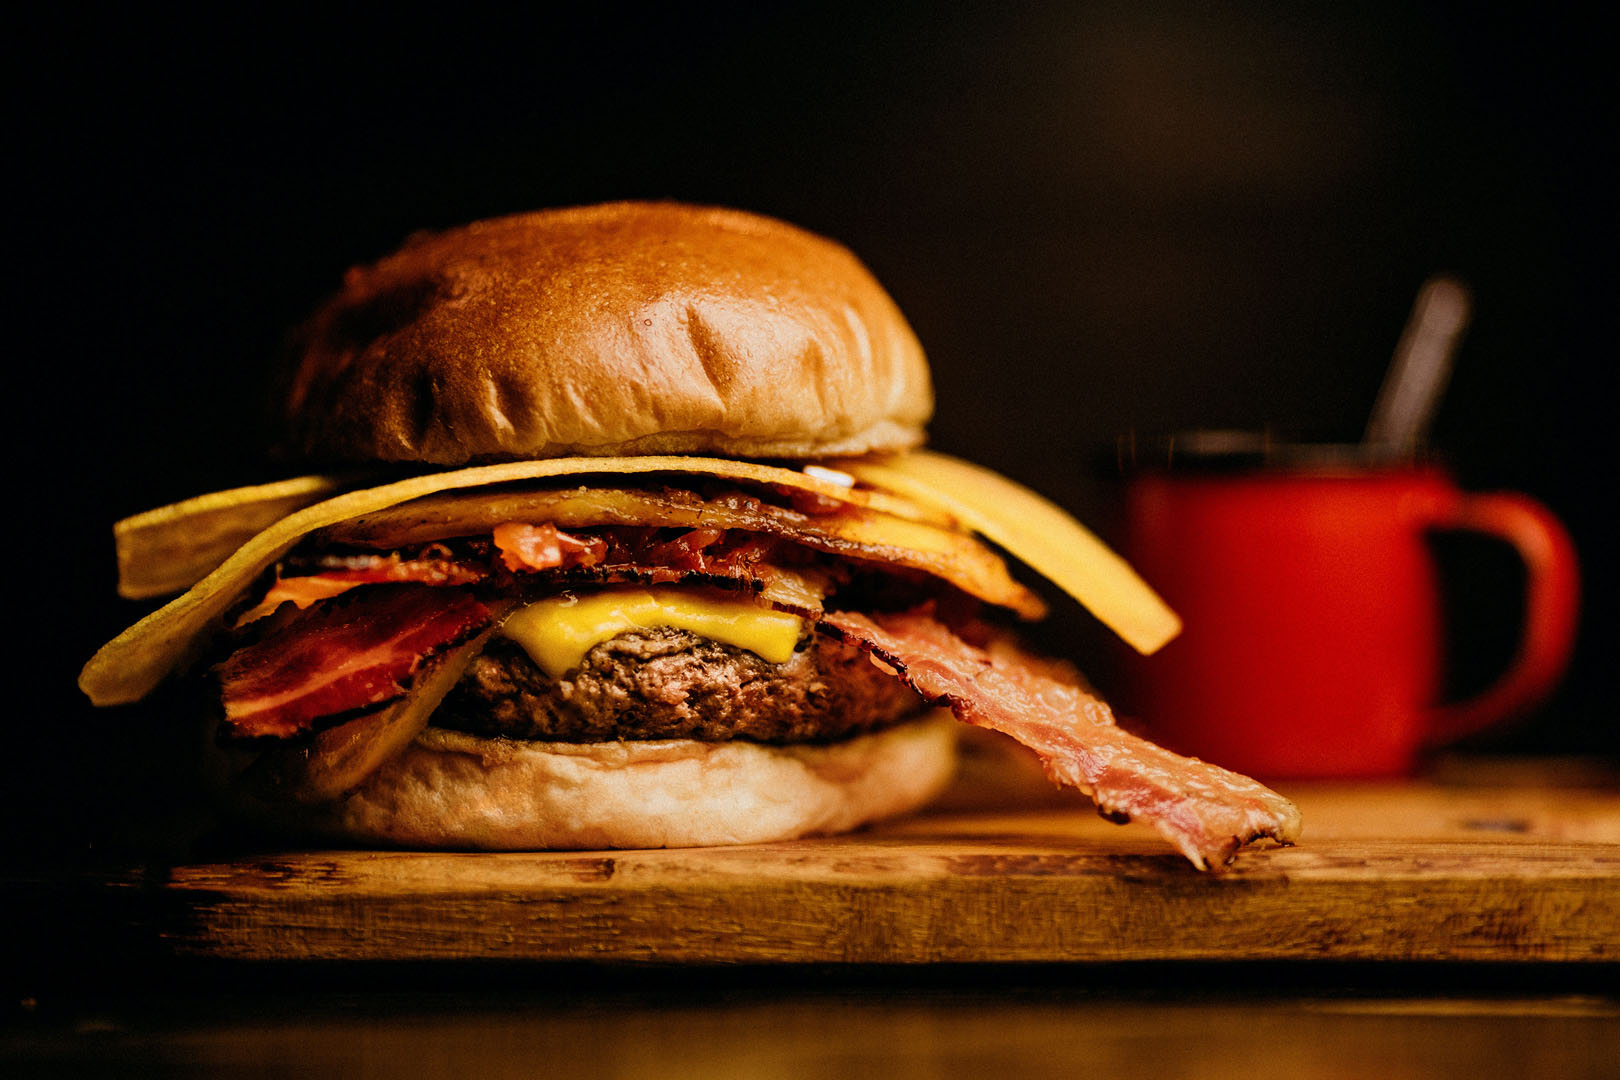 ham-and-bacon-burger-2983098.jpg